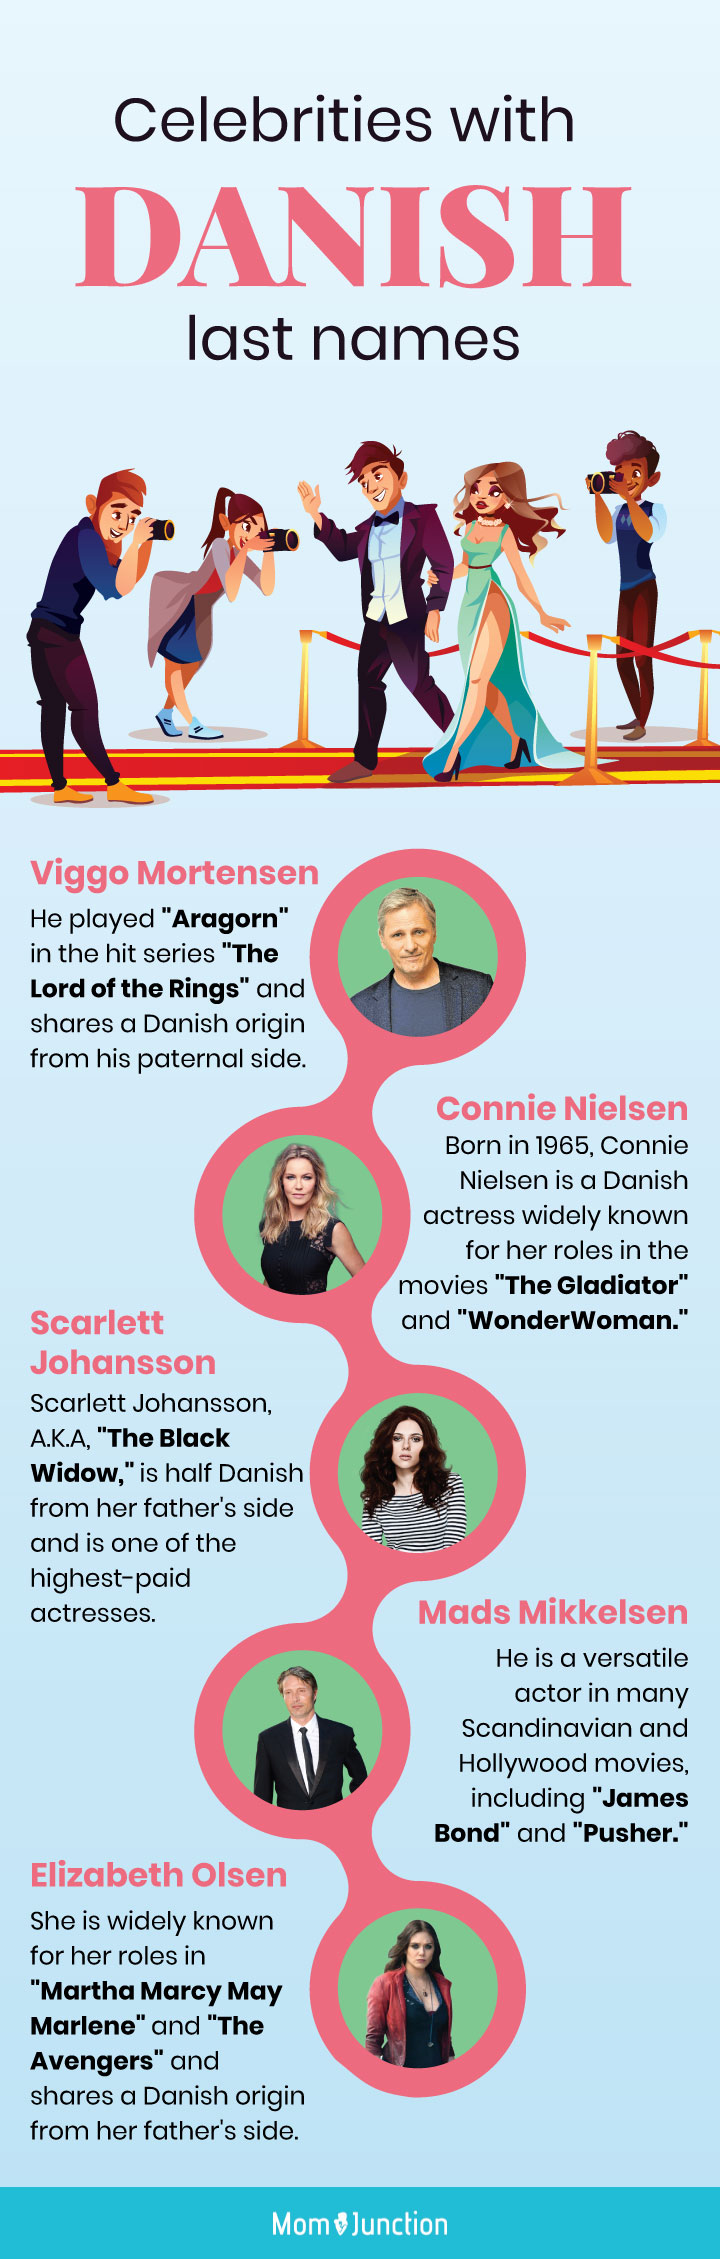 celebrities with danish last names (infographic)